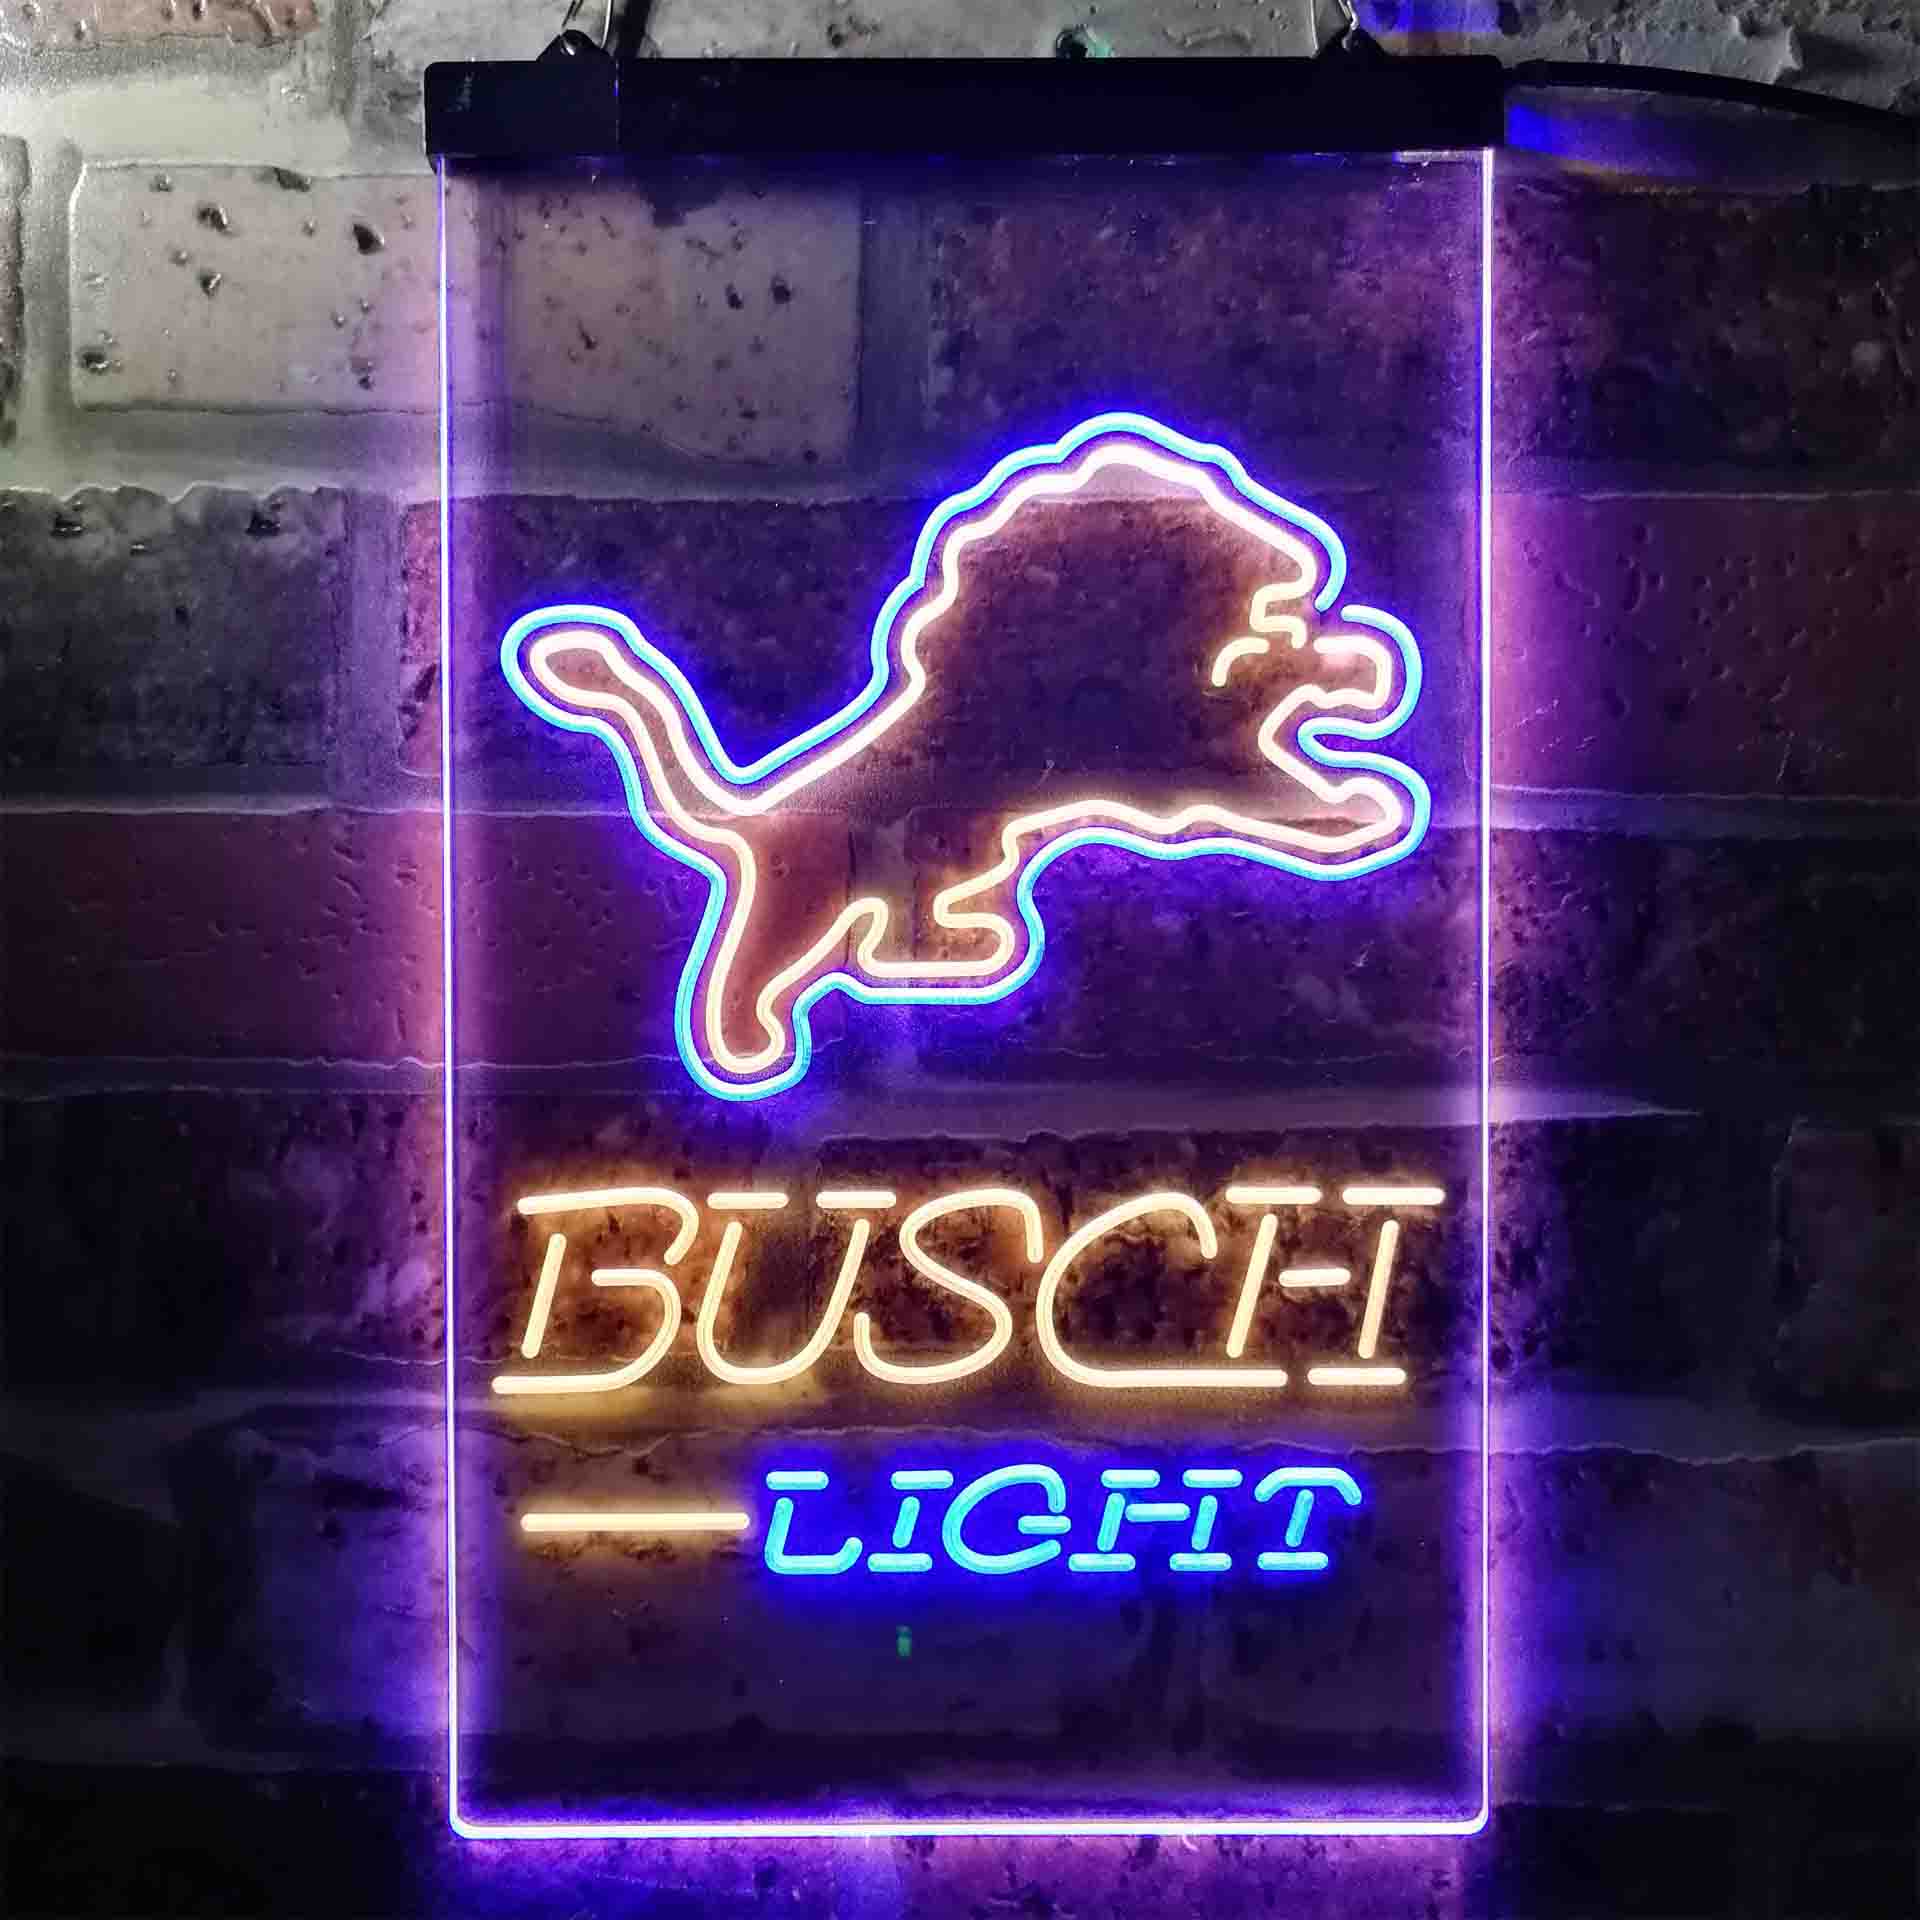 Busch Light Detroit Lion Neon-Like LED Sign